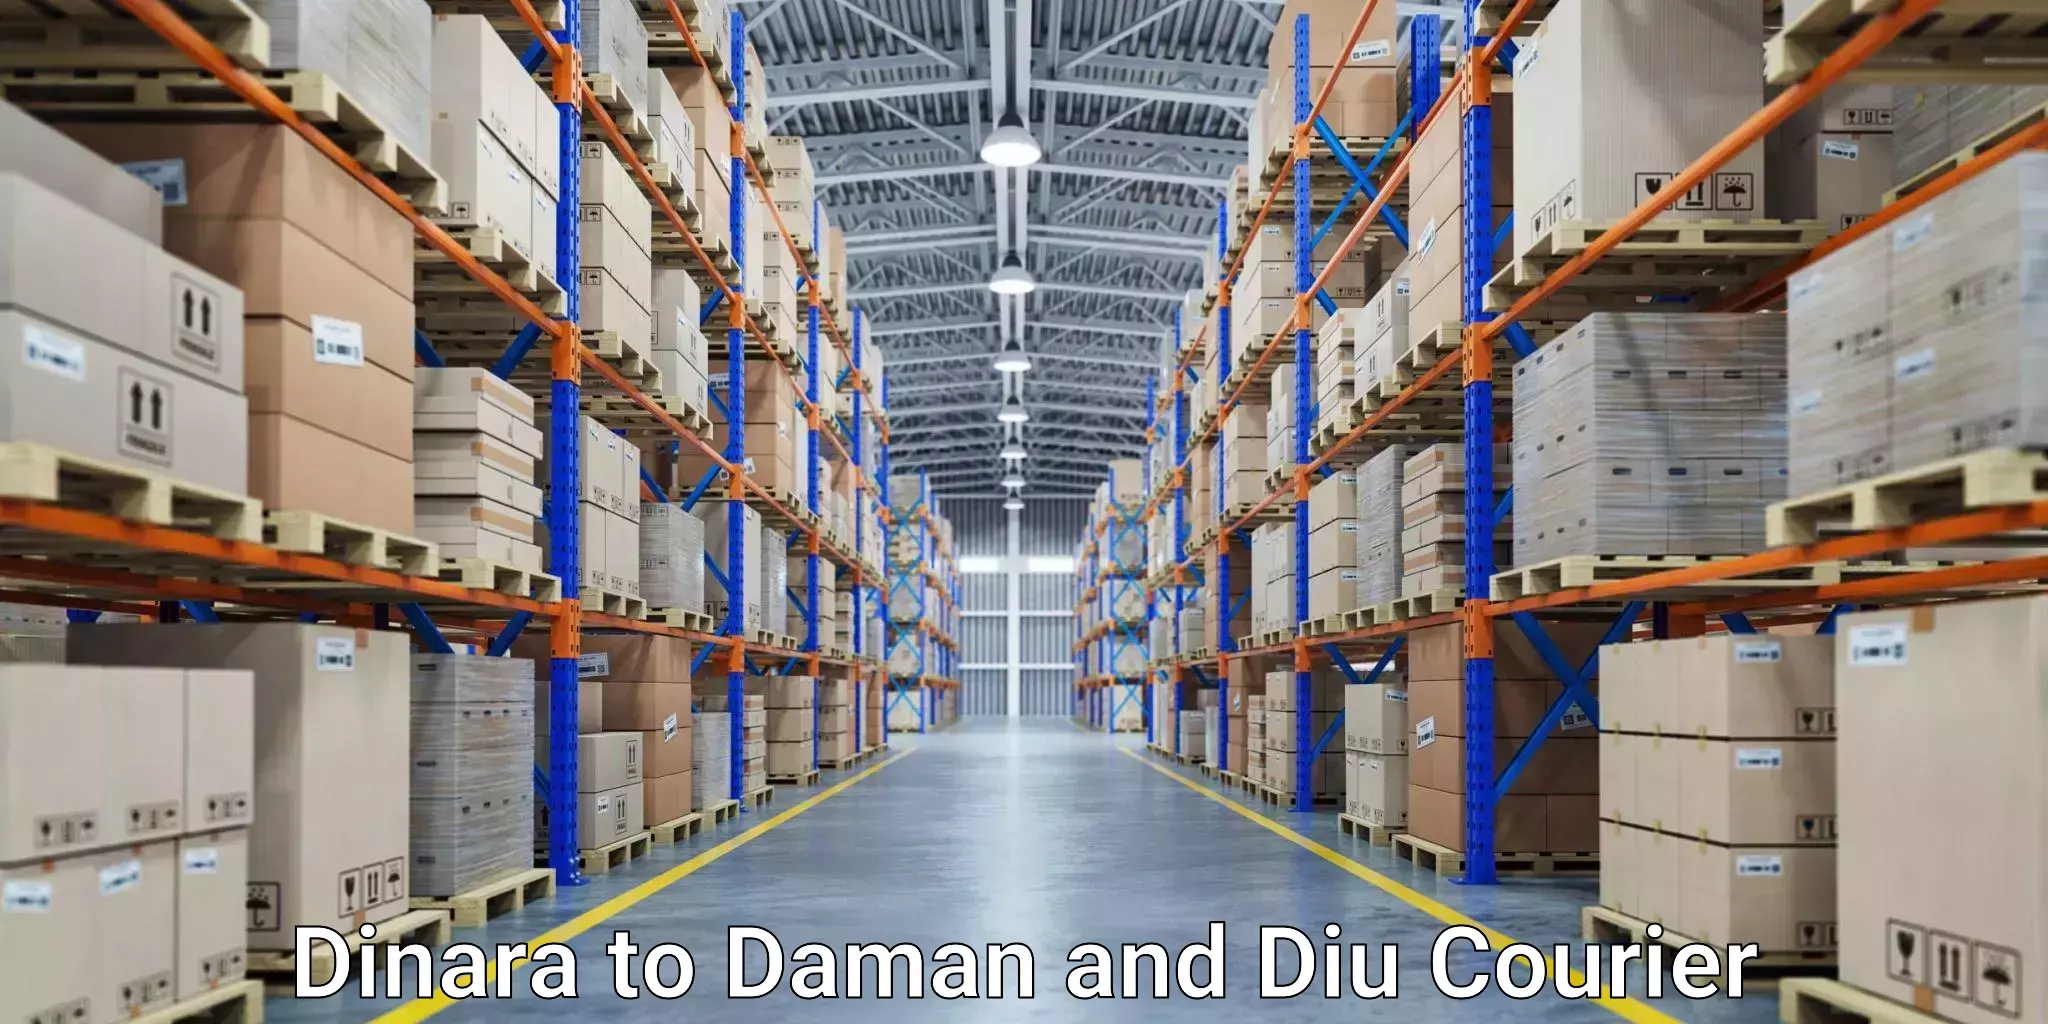 Small business couriers Dinara to Diu